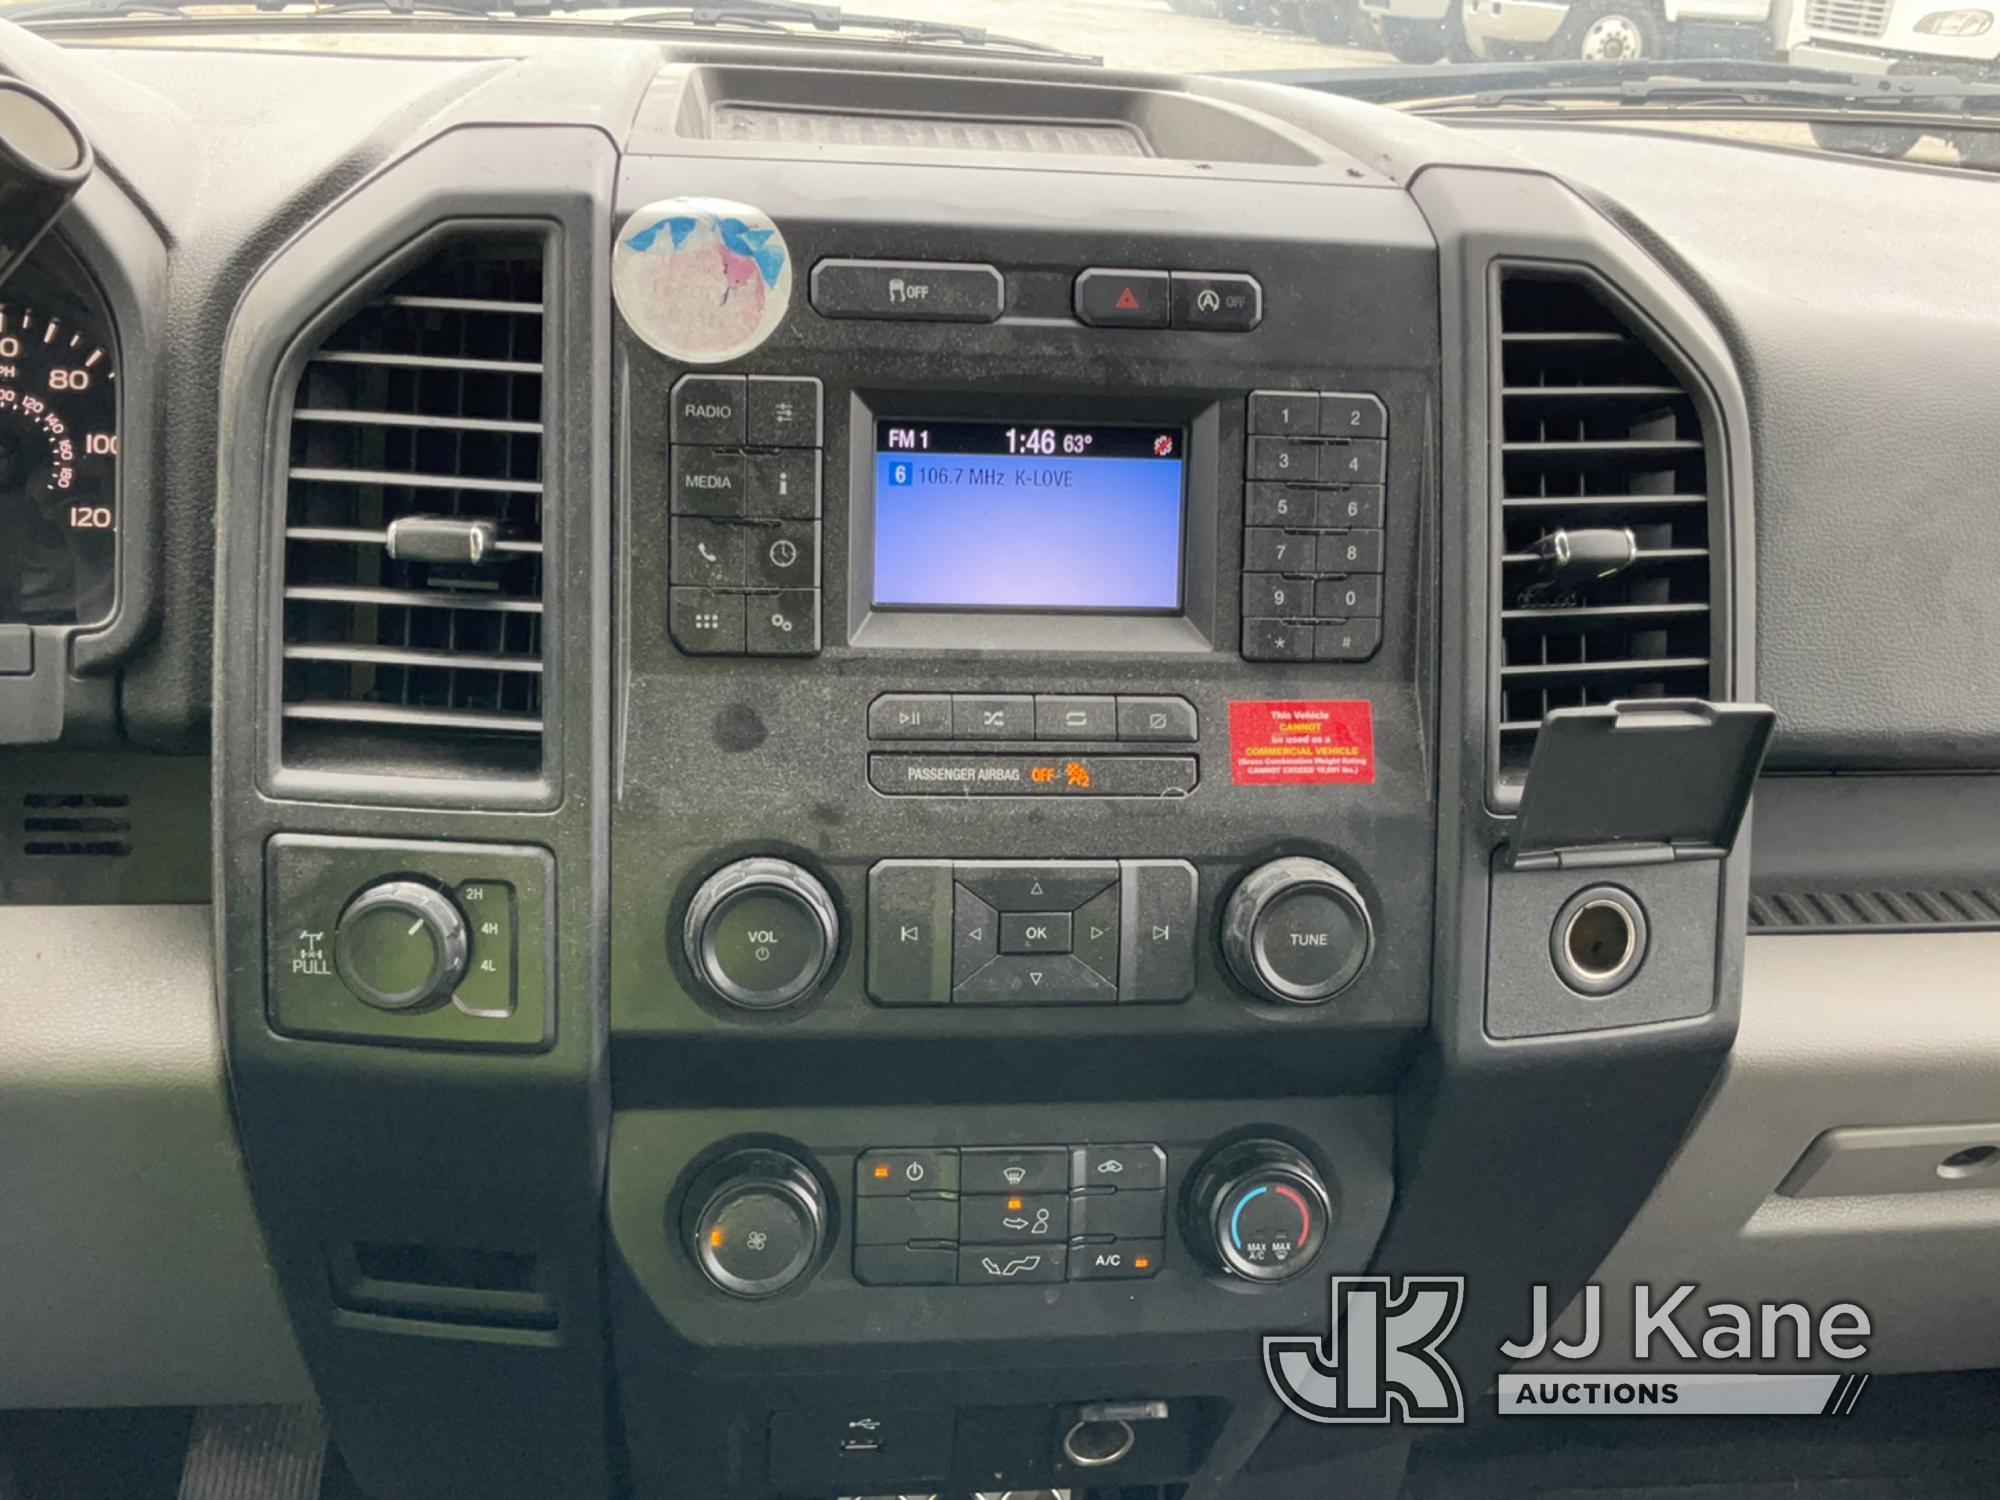 (Villa Rica, GA) 2018 Ford F150 4x4 Extended-Cab Pickup Truck, (GA Power Unit) Runs & Moves) (Check